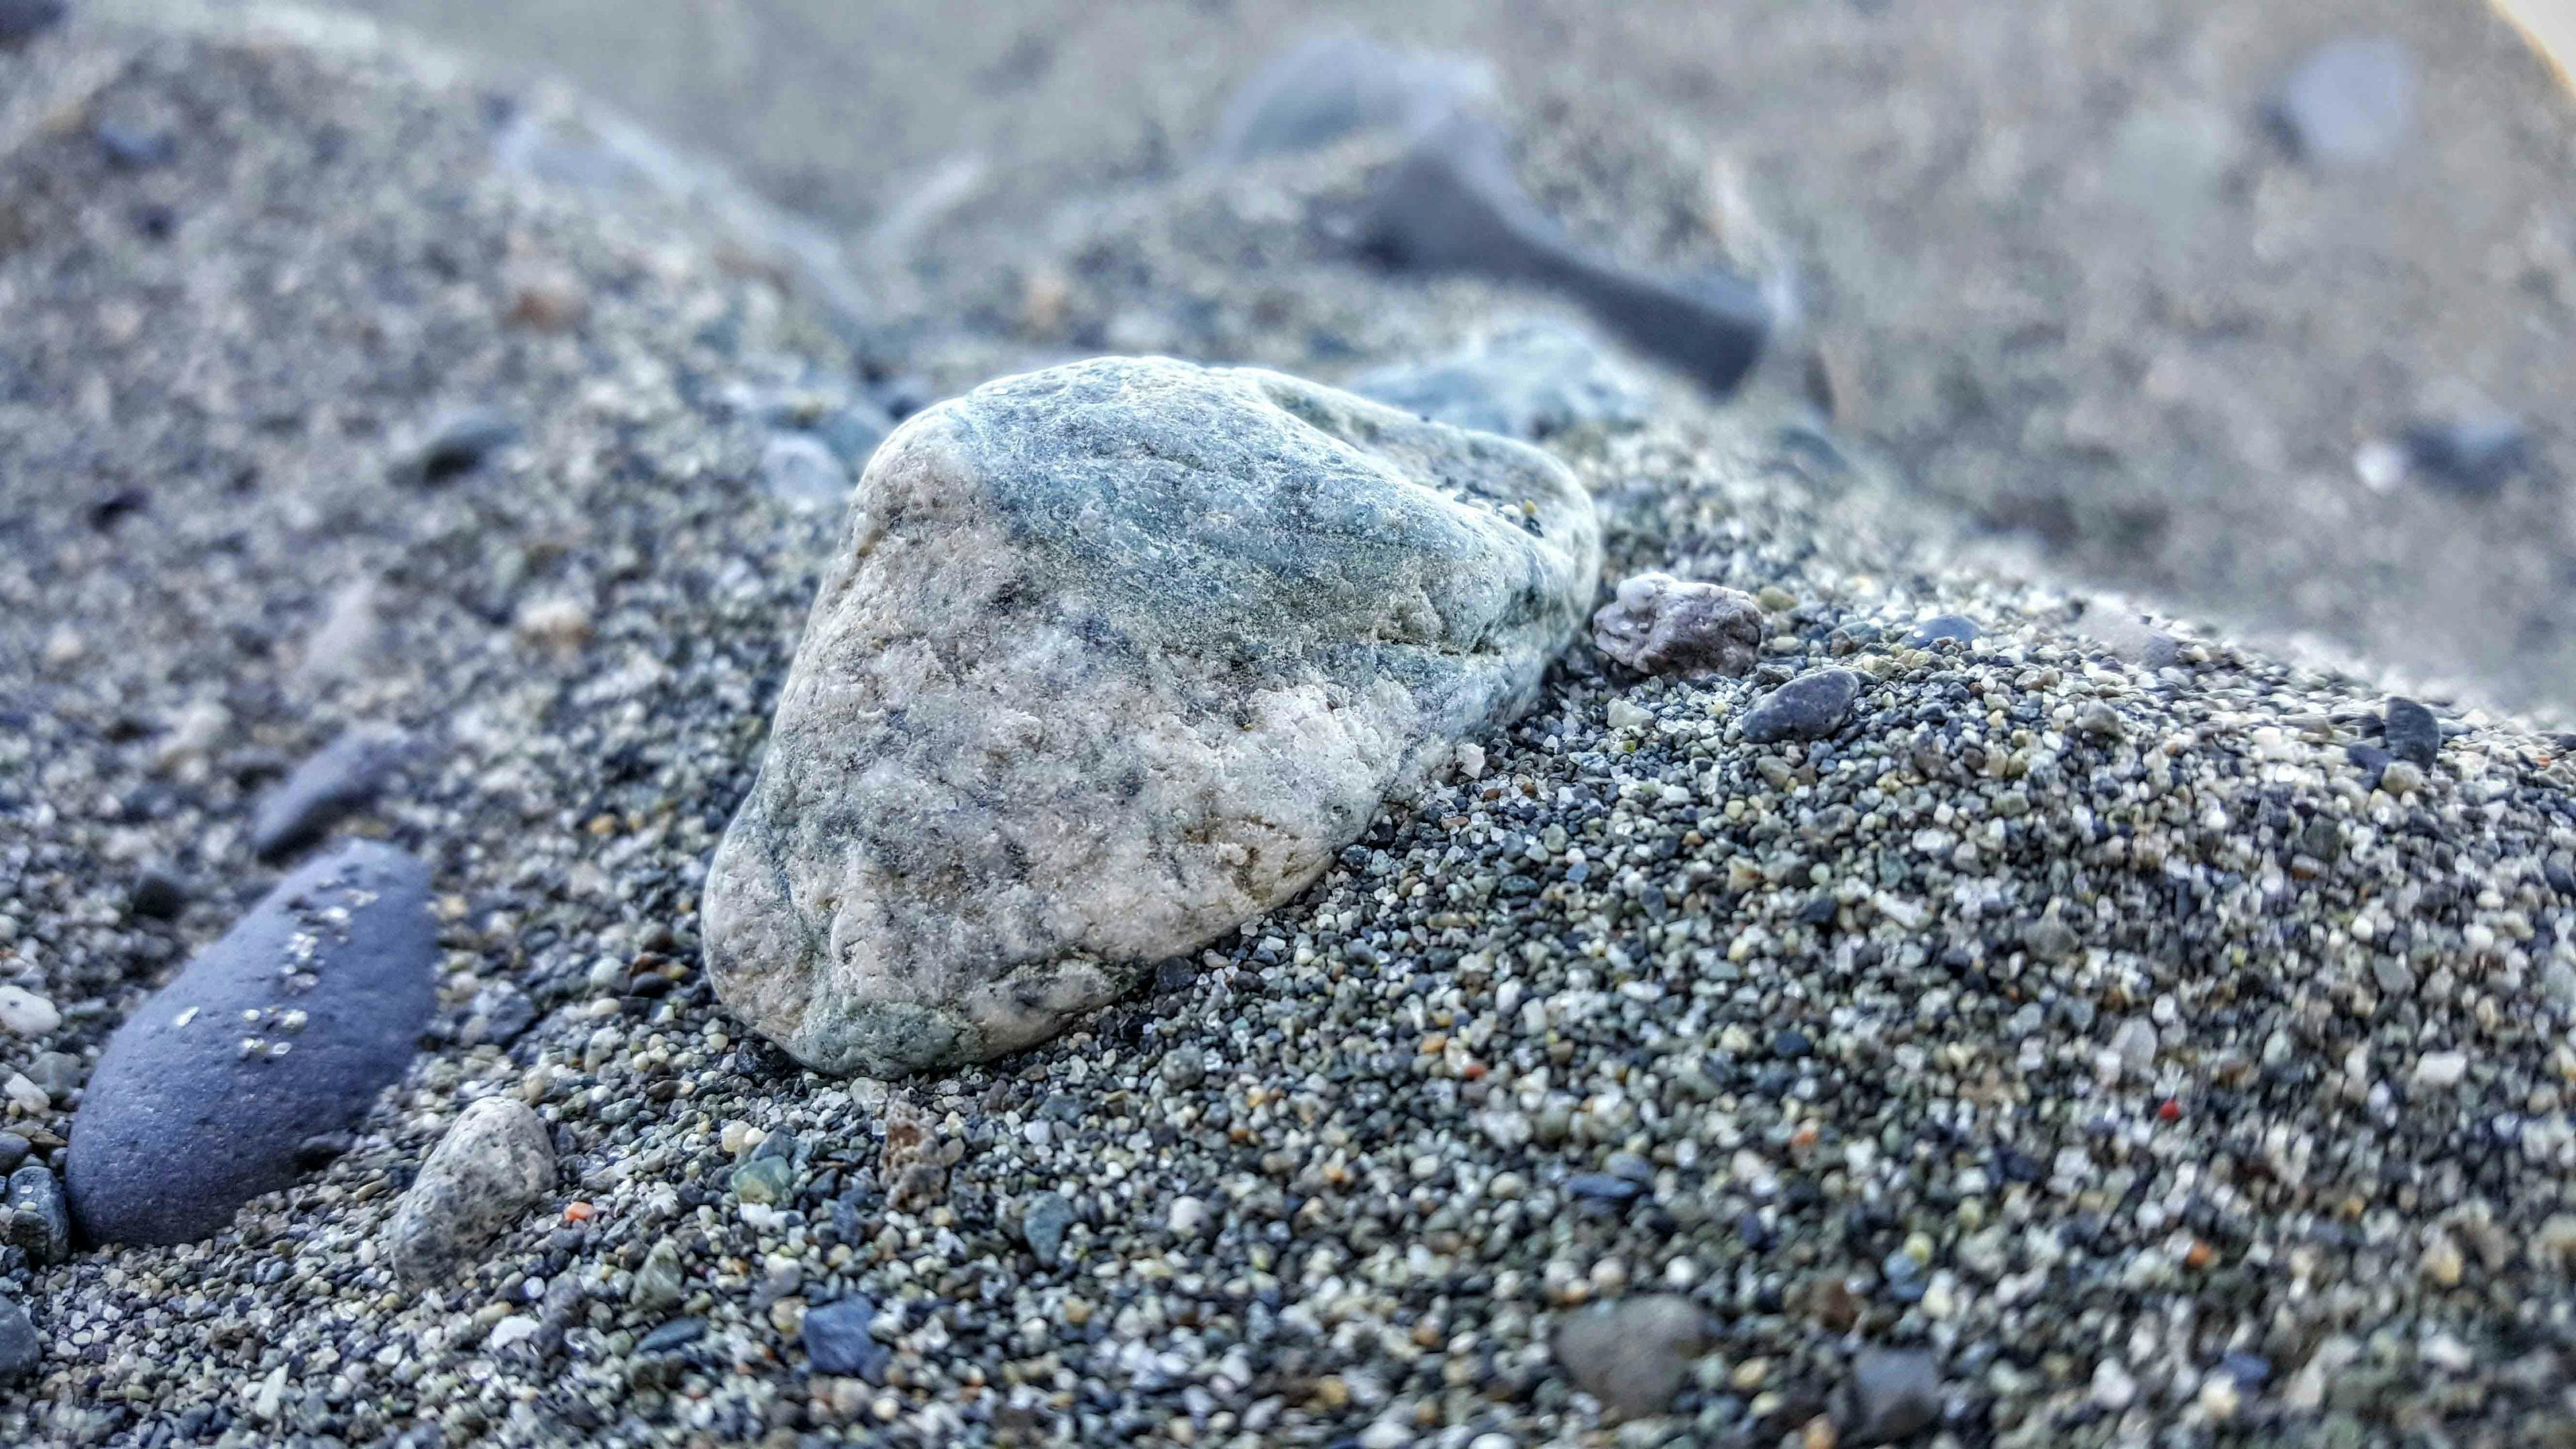 Rocks at the beach